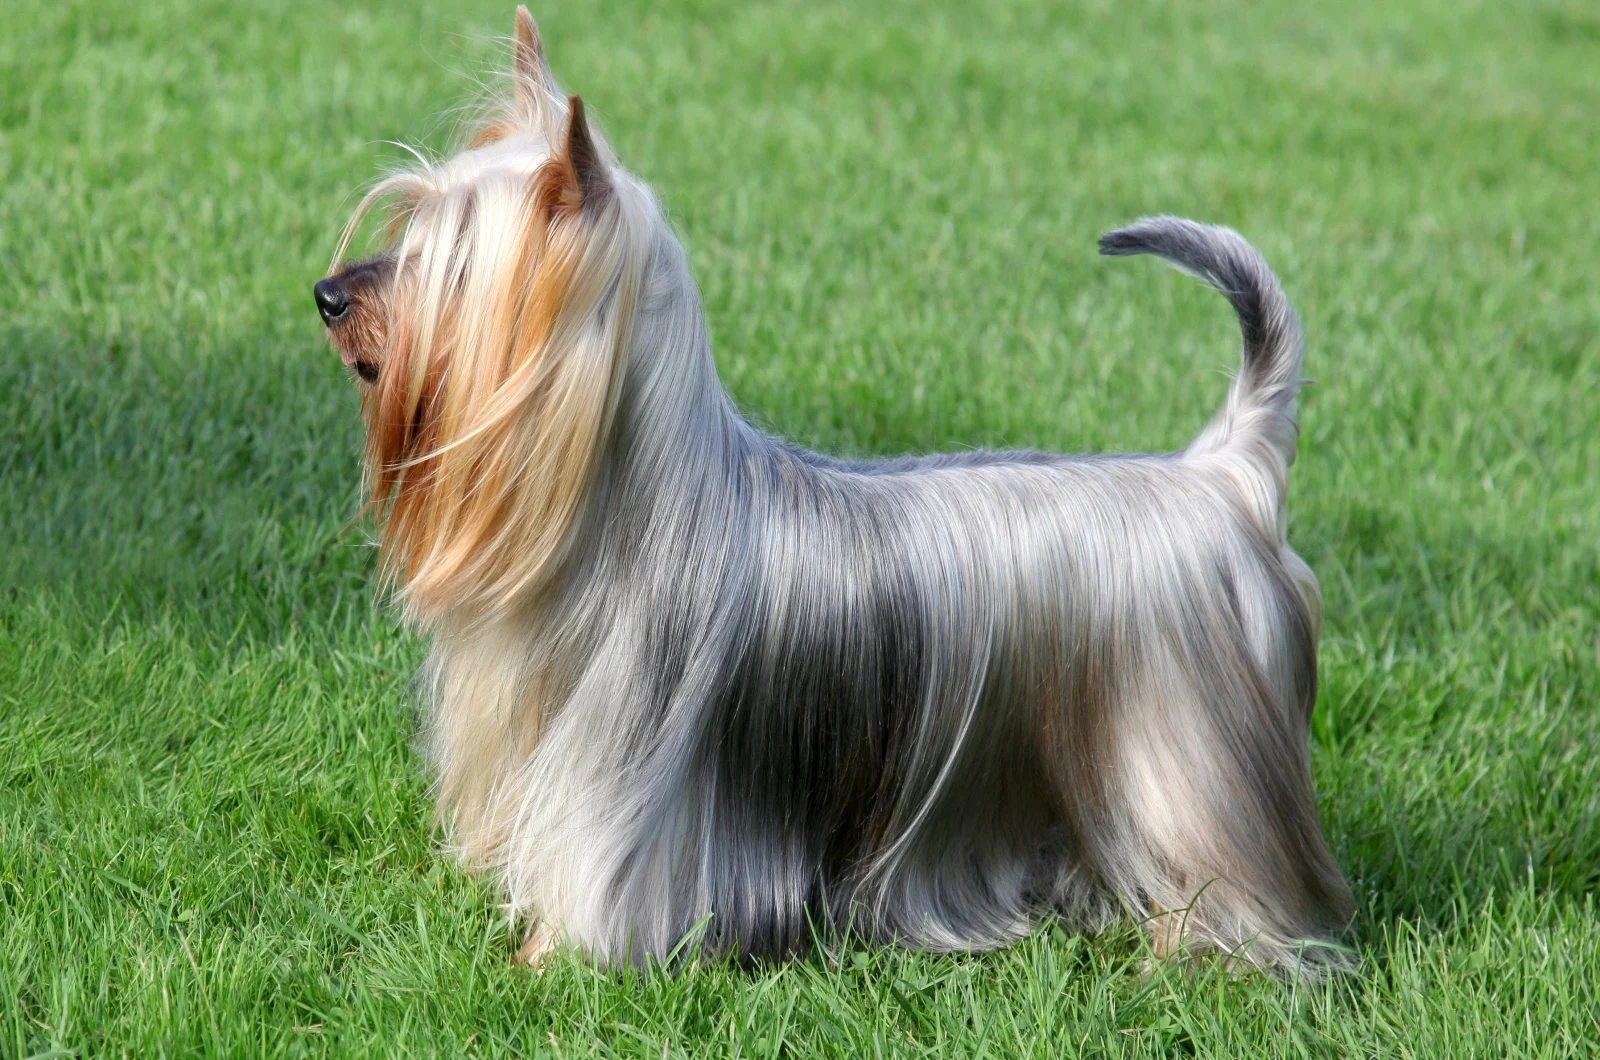 Silky Terrier standing on grass